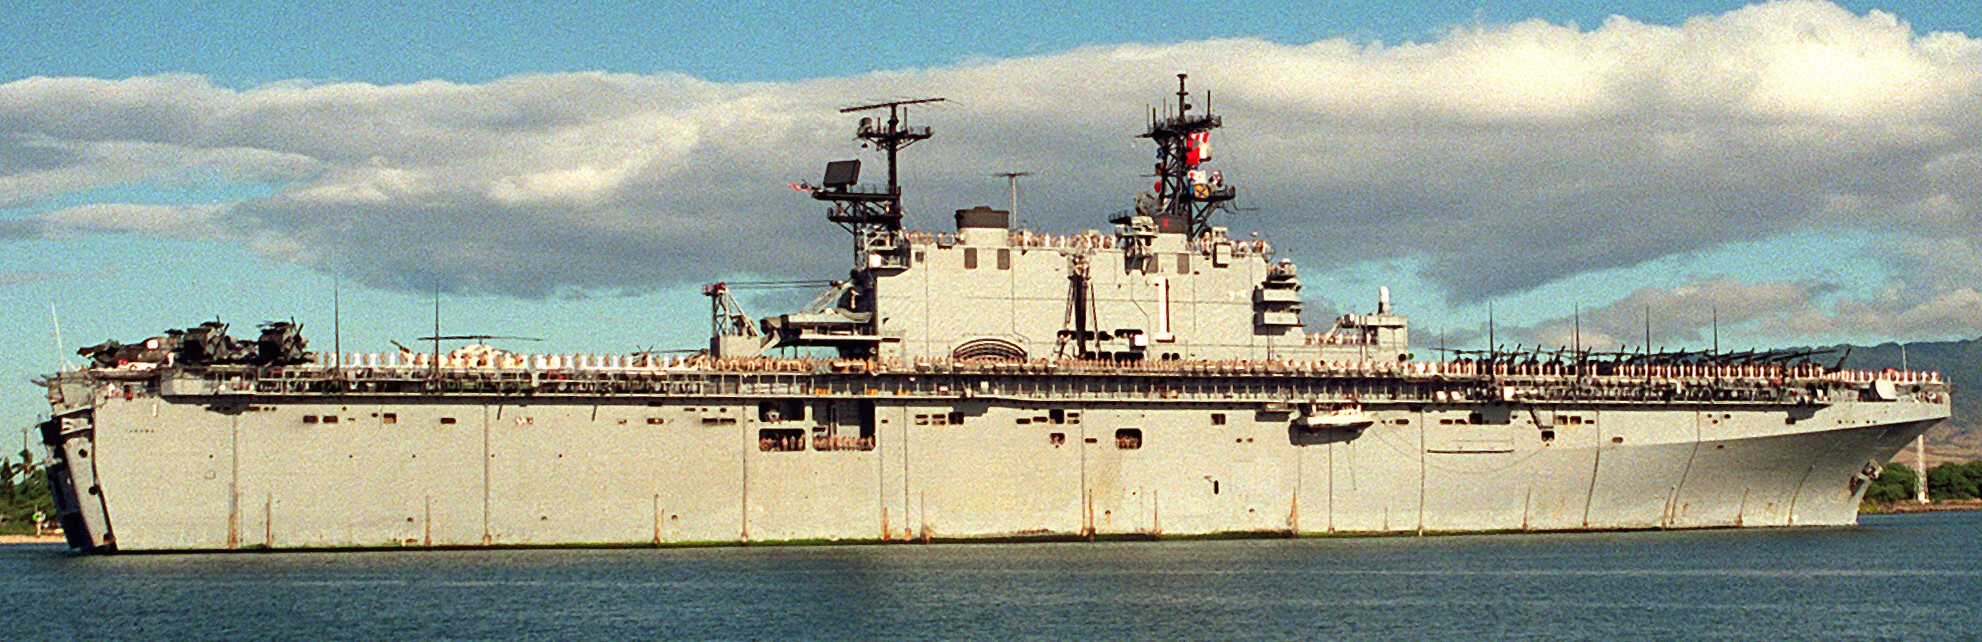 lha-1 uss tarawa amphibious assault ship us navy pearl harbor hawaii desert storm 81